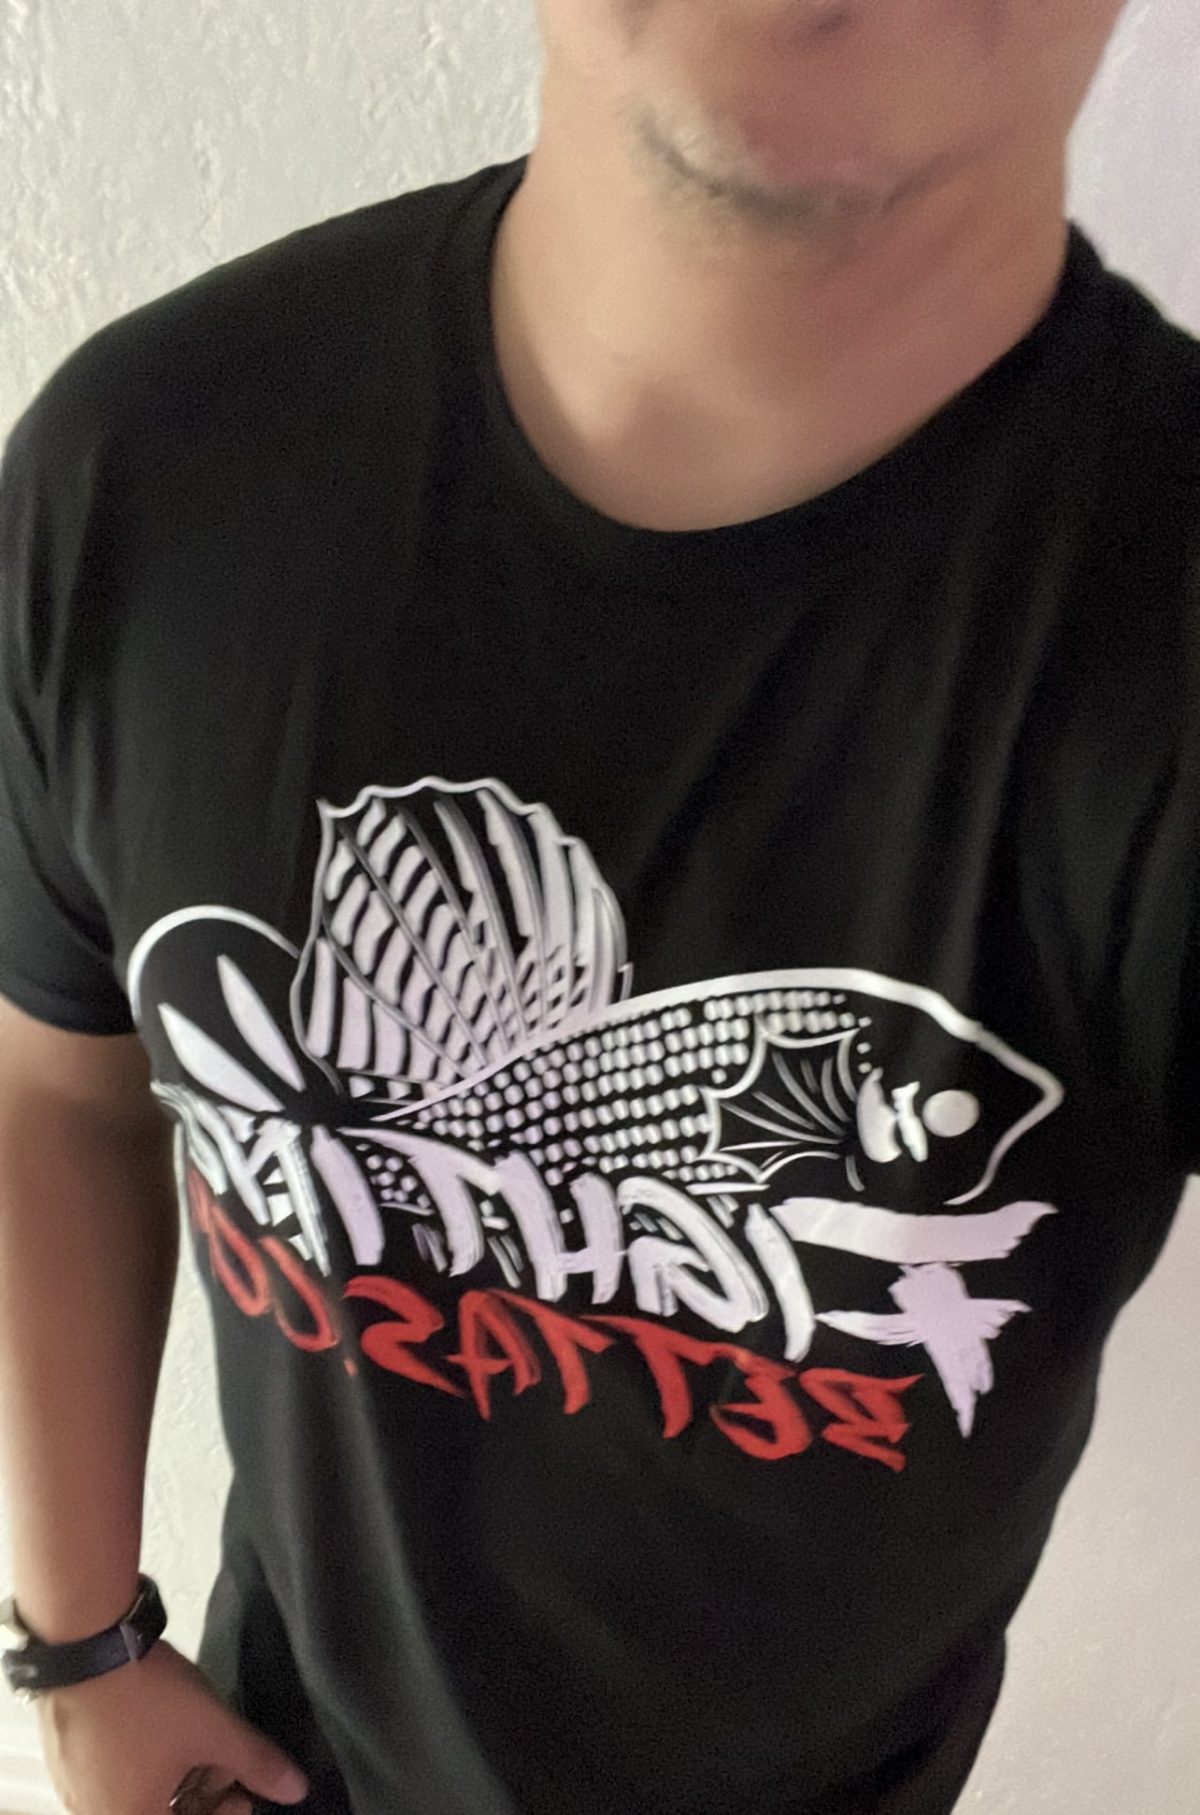 FightingBettas Official Logo T-Shirt 100% ring spun cotton